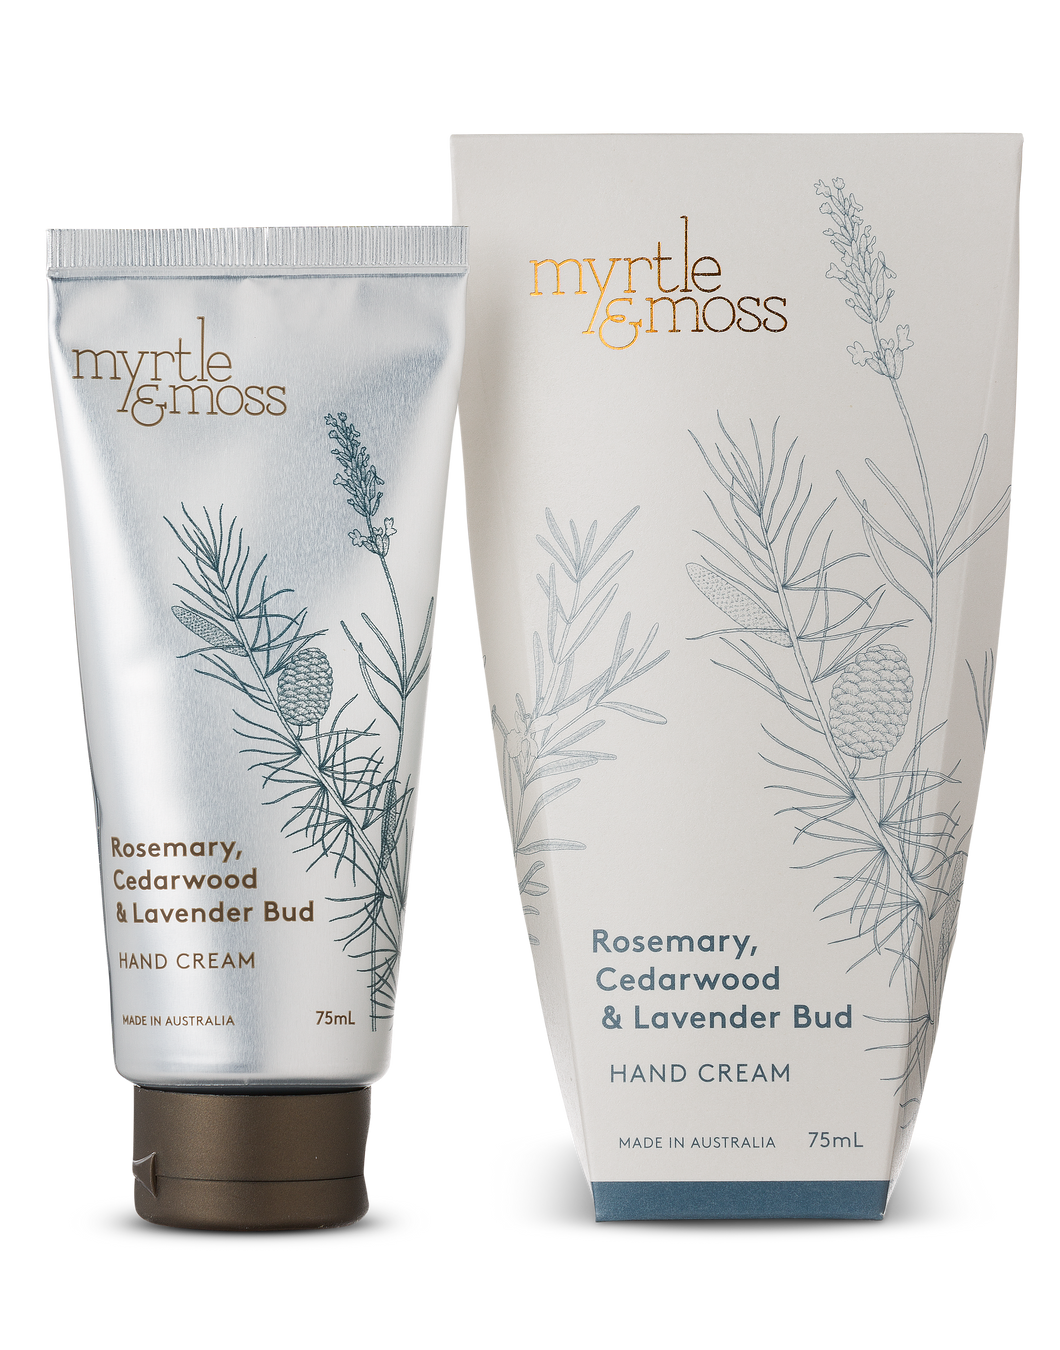 Myrtle & Moss Rosemary, Cedarwood & Lavender Bud Hand Cream 75ml